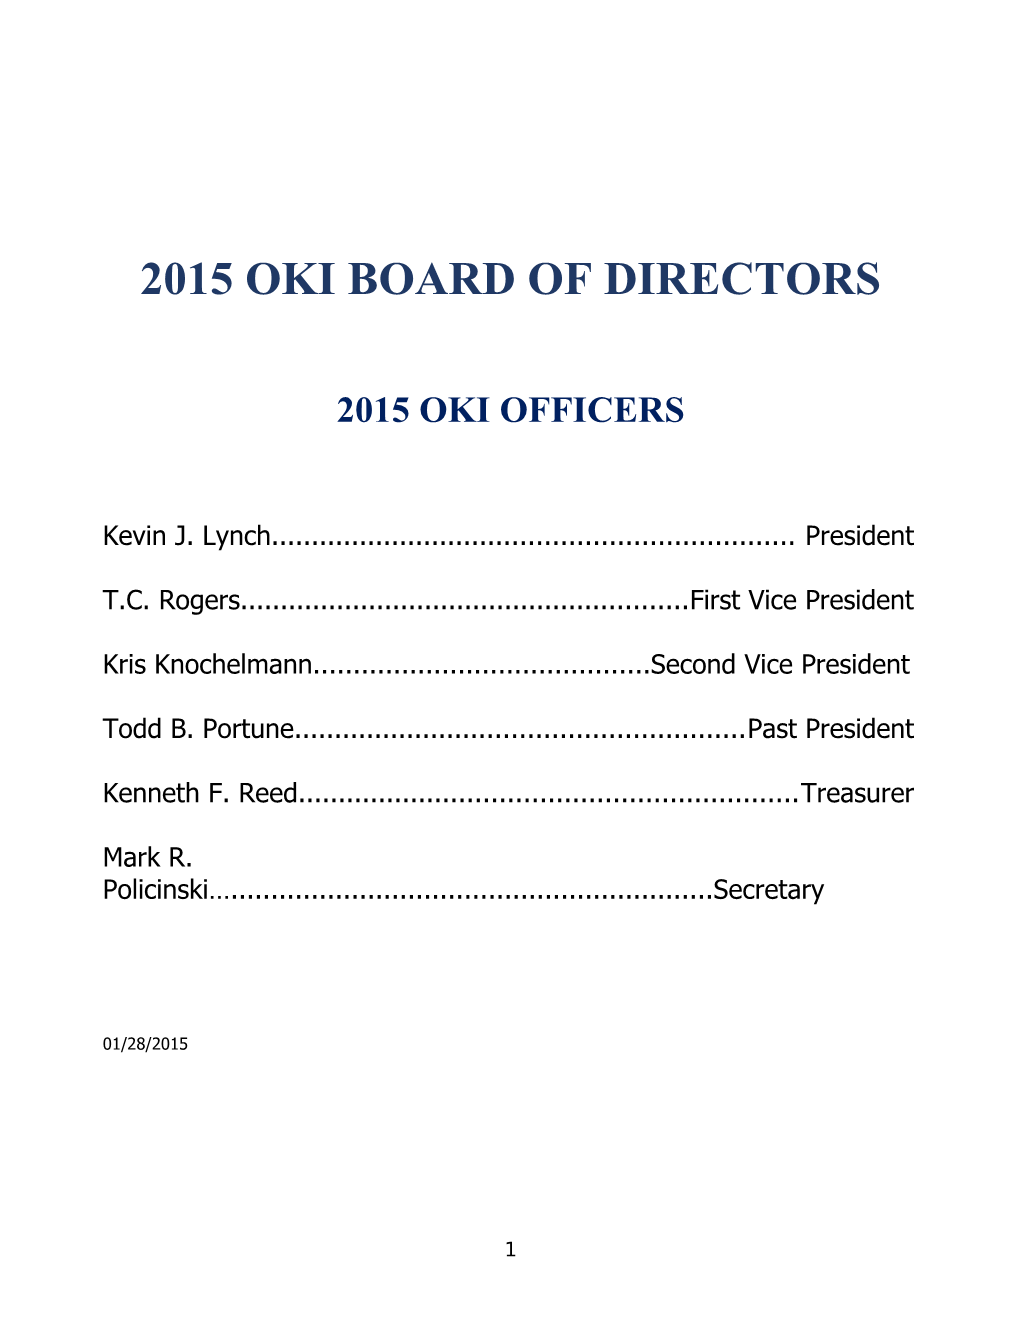 2015 Oki Board of Directors